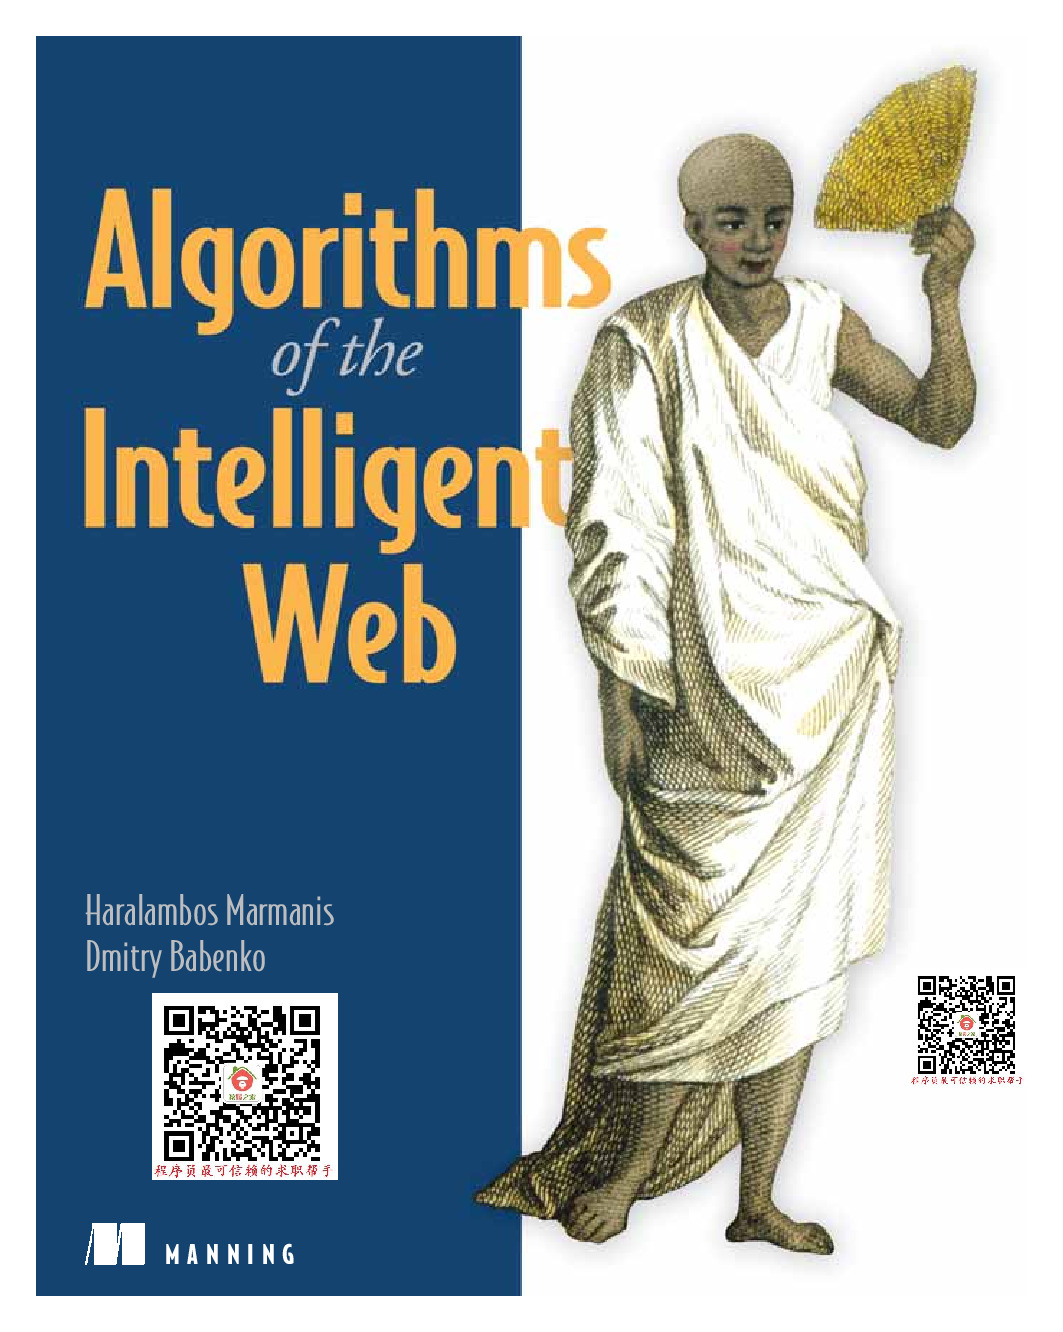 Algorithms of the Intelligent Web (Manning 2009)